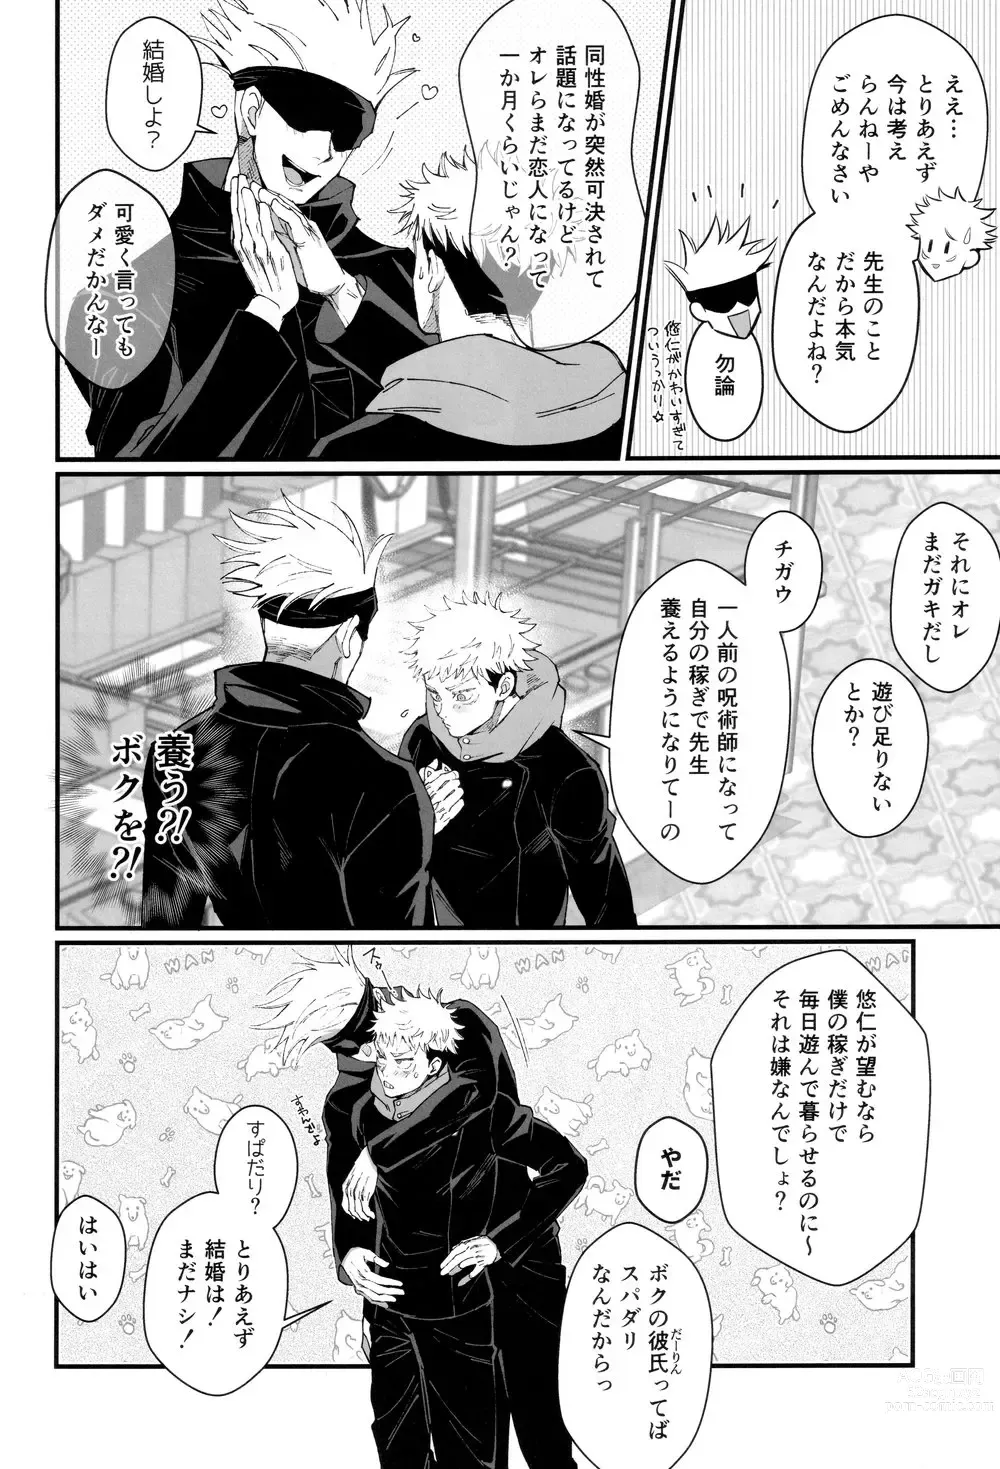 Page 15 of doujinshi Zoku Gachikoi Monster